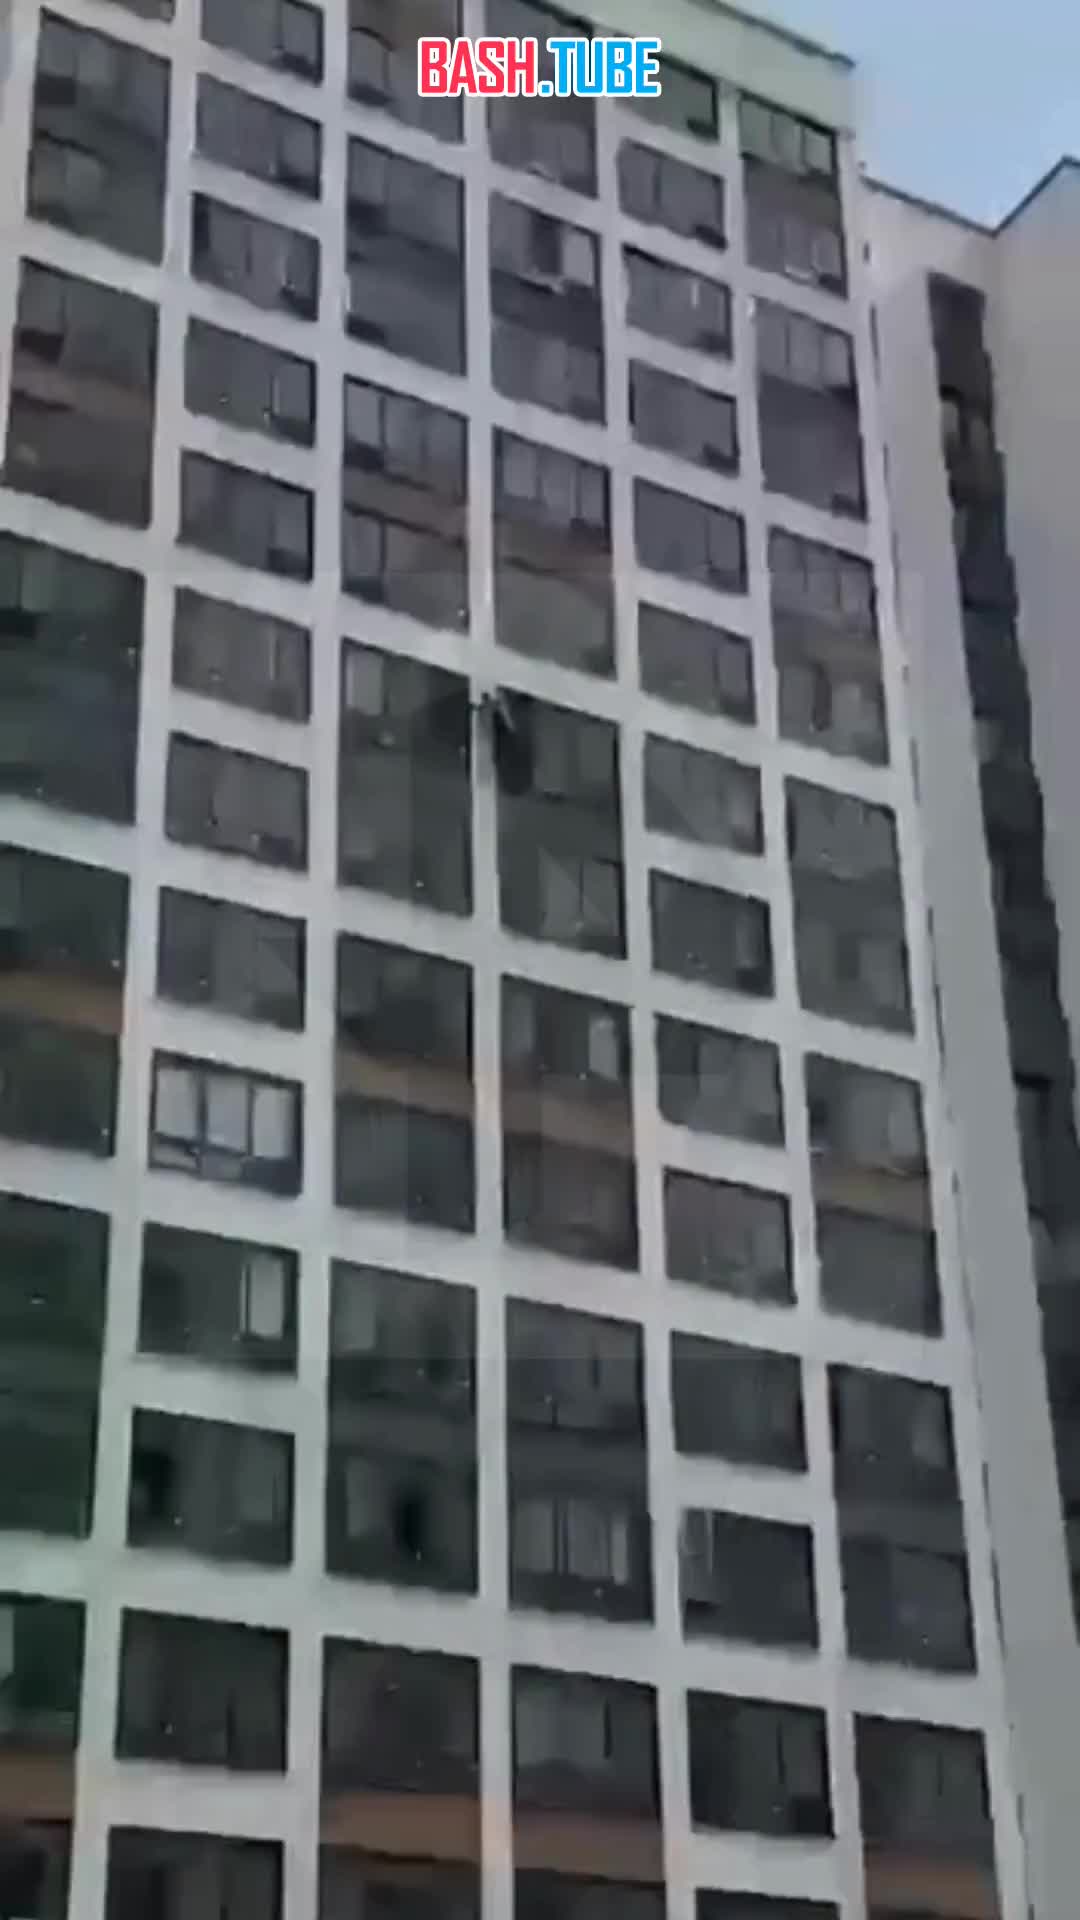  Перелез через балкон на 11-м этаже и спас запертую пенсионерку